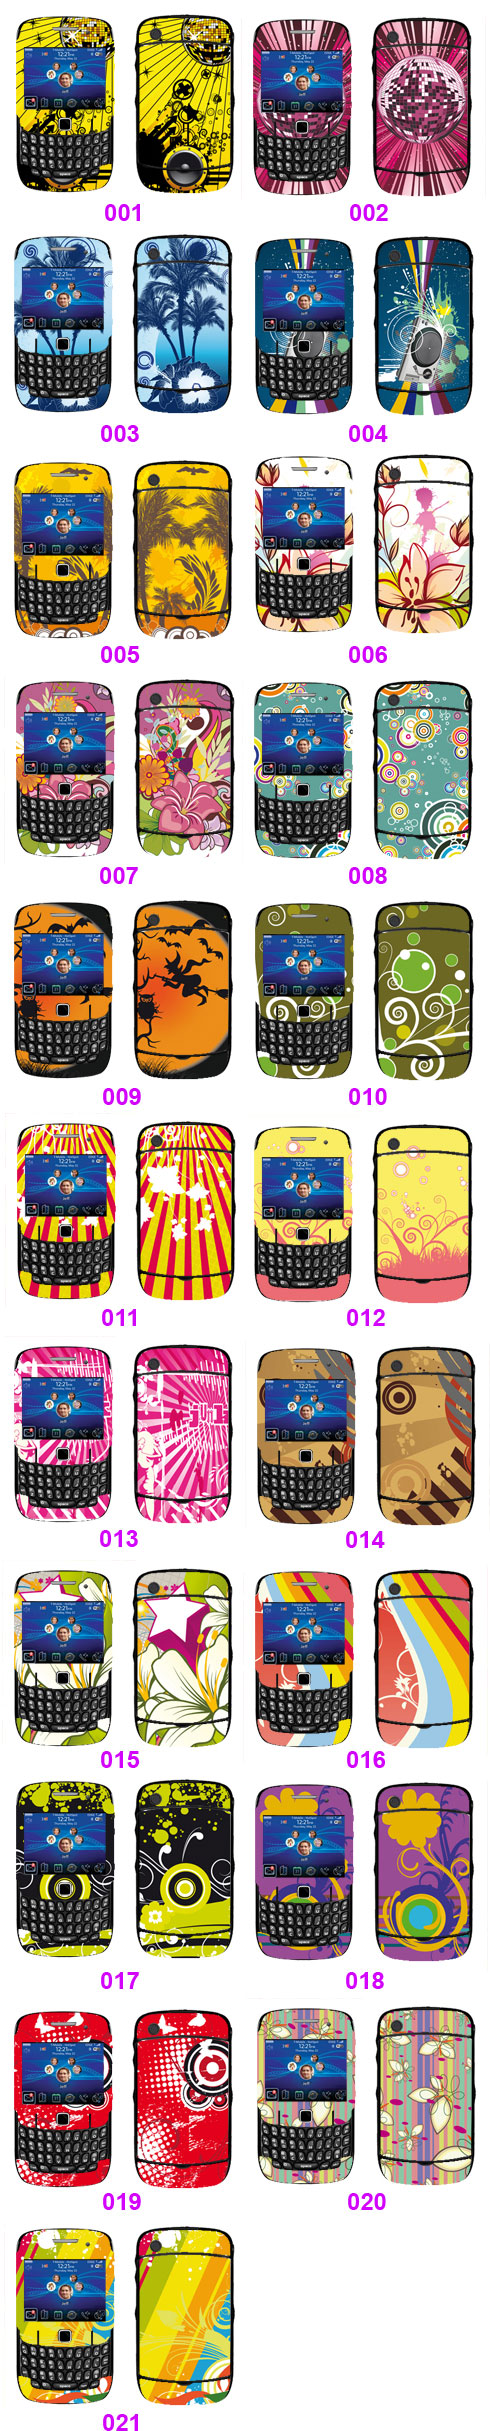 blackberry-curve-8520-modelos.jpg